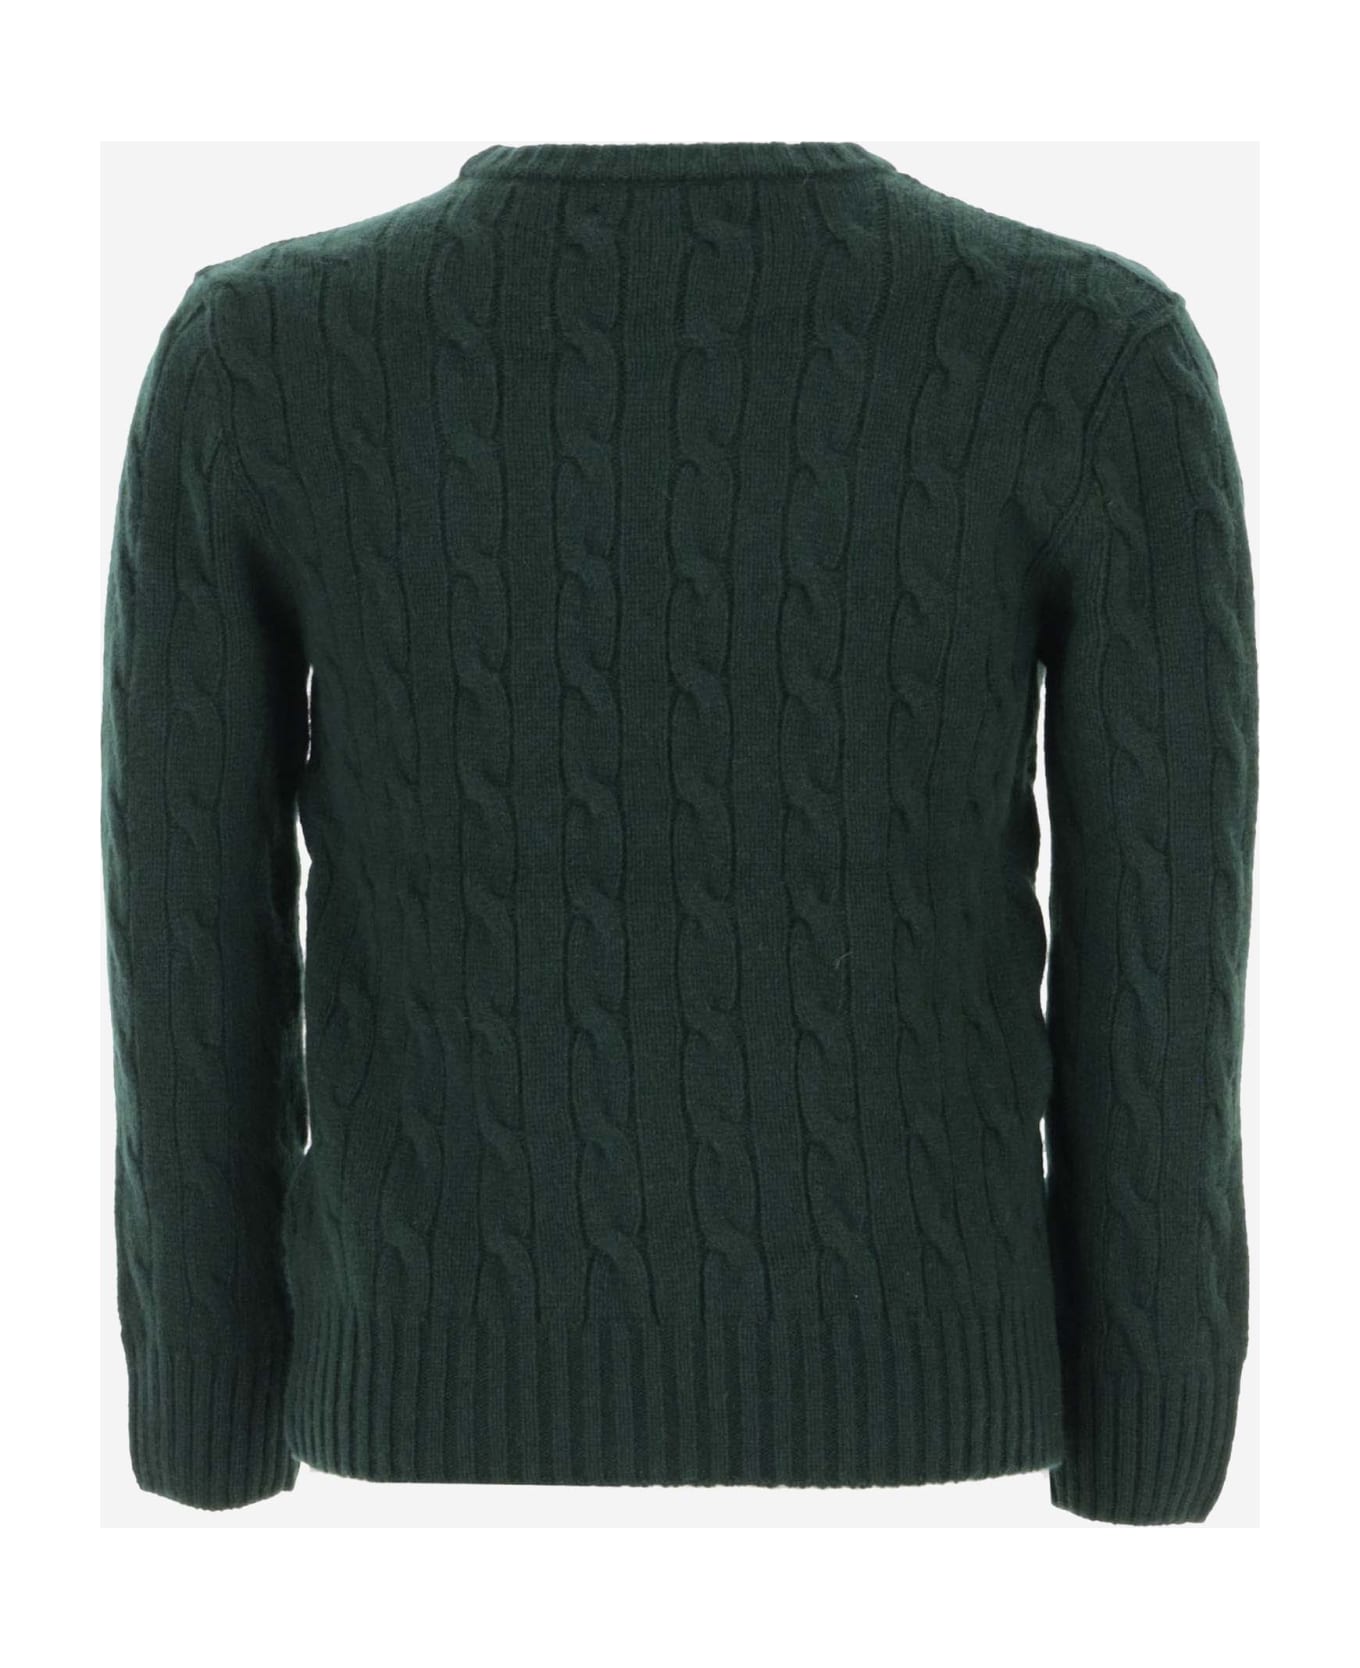 Ralph Lauren Wool And Cashmere Sweater - Green